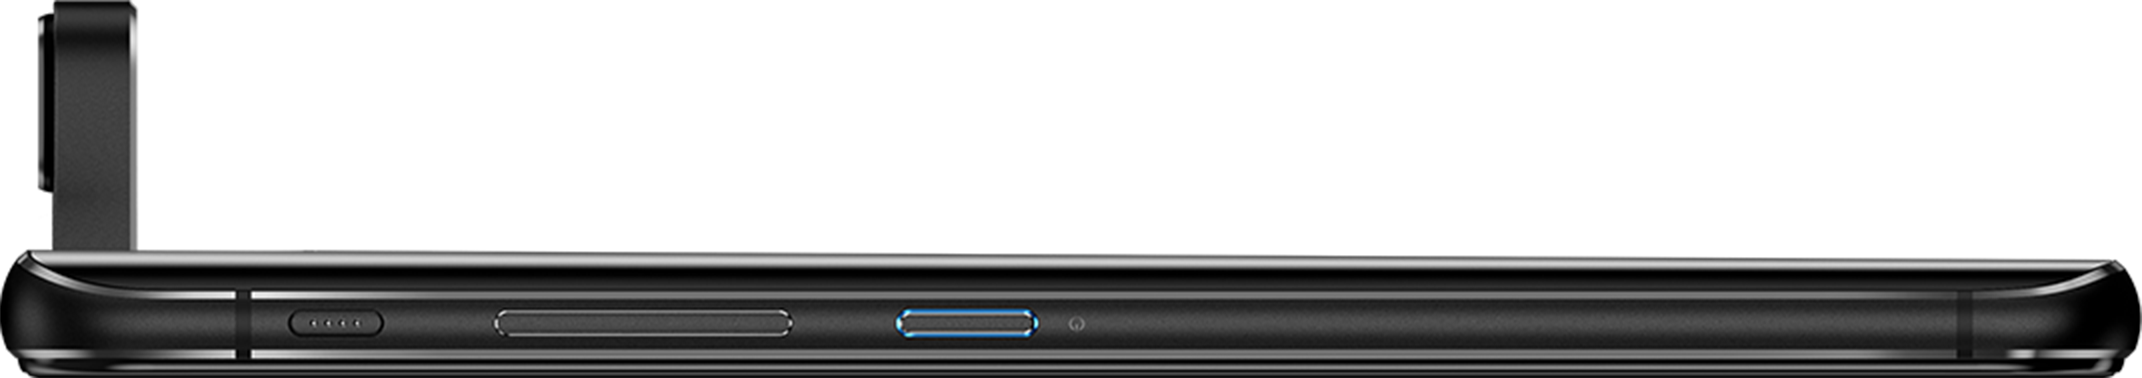 Imagem Zenfone 6 Motion Tracking - celular lateral